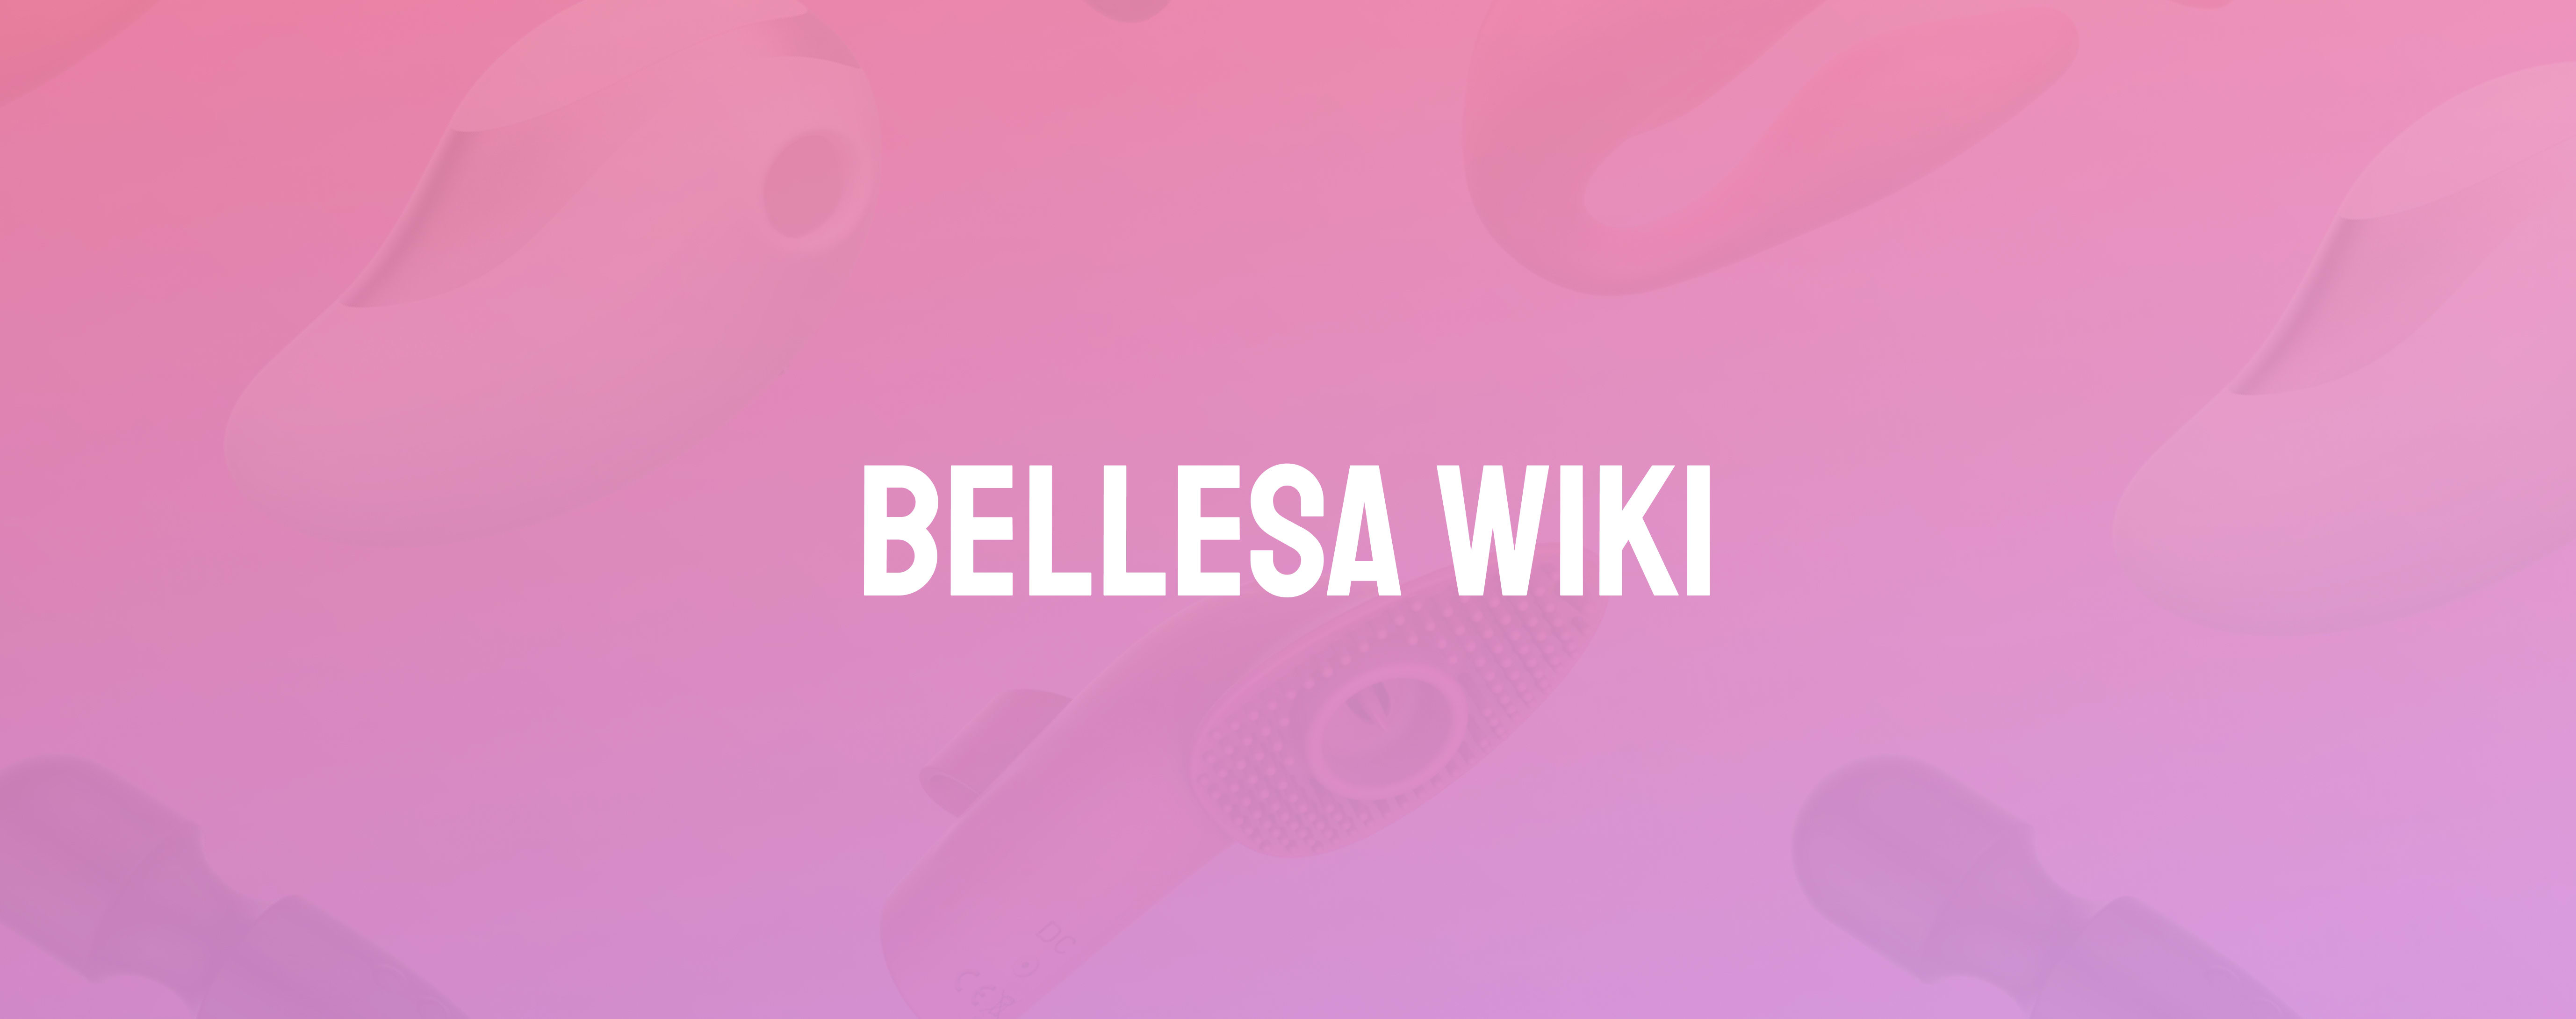 5510px x 2180px - Figging - Bellesa Wiki | Bellesa - Porn for Women